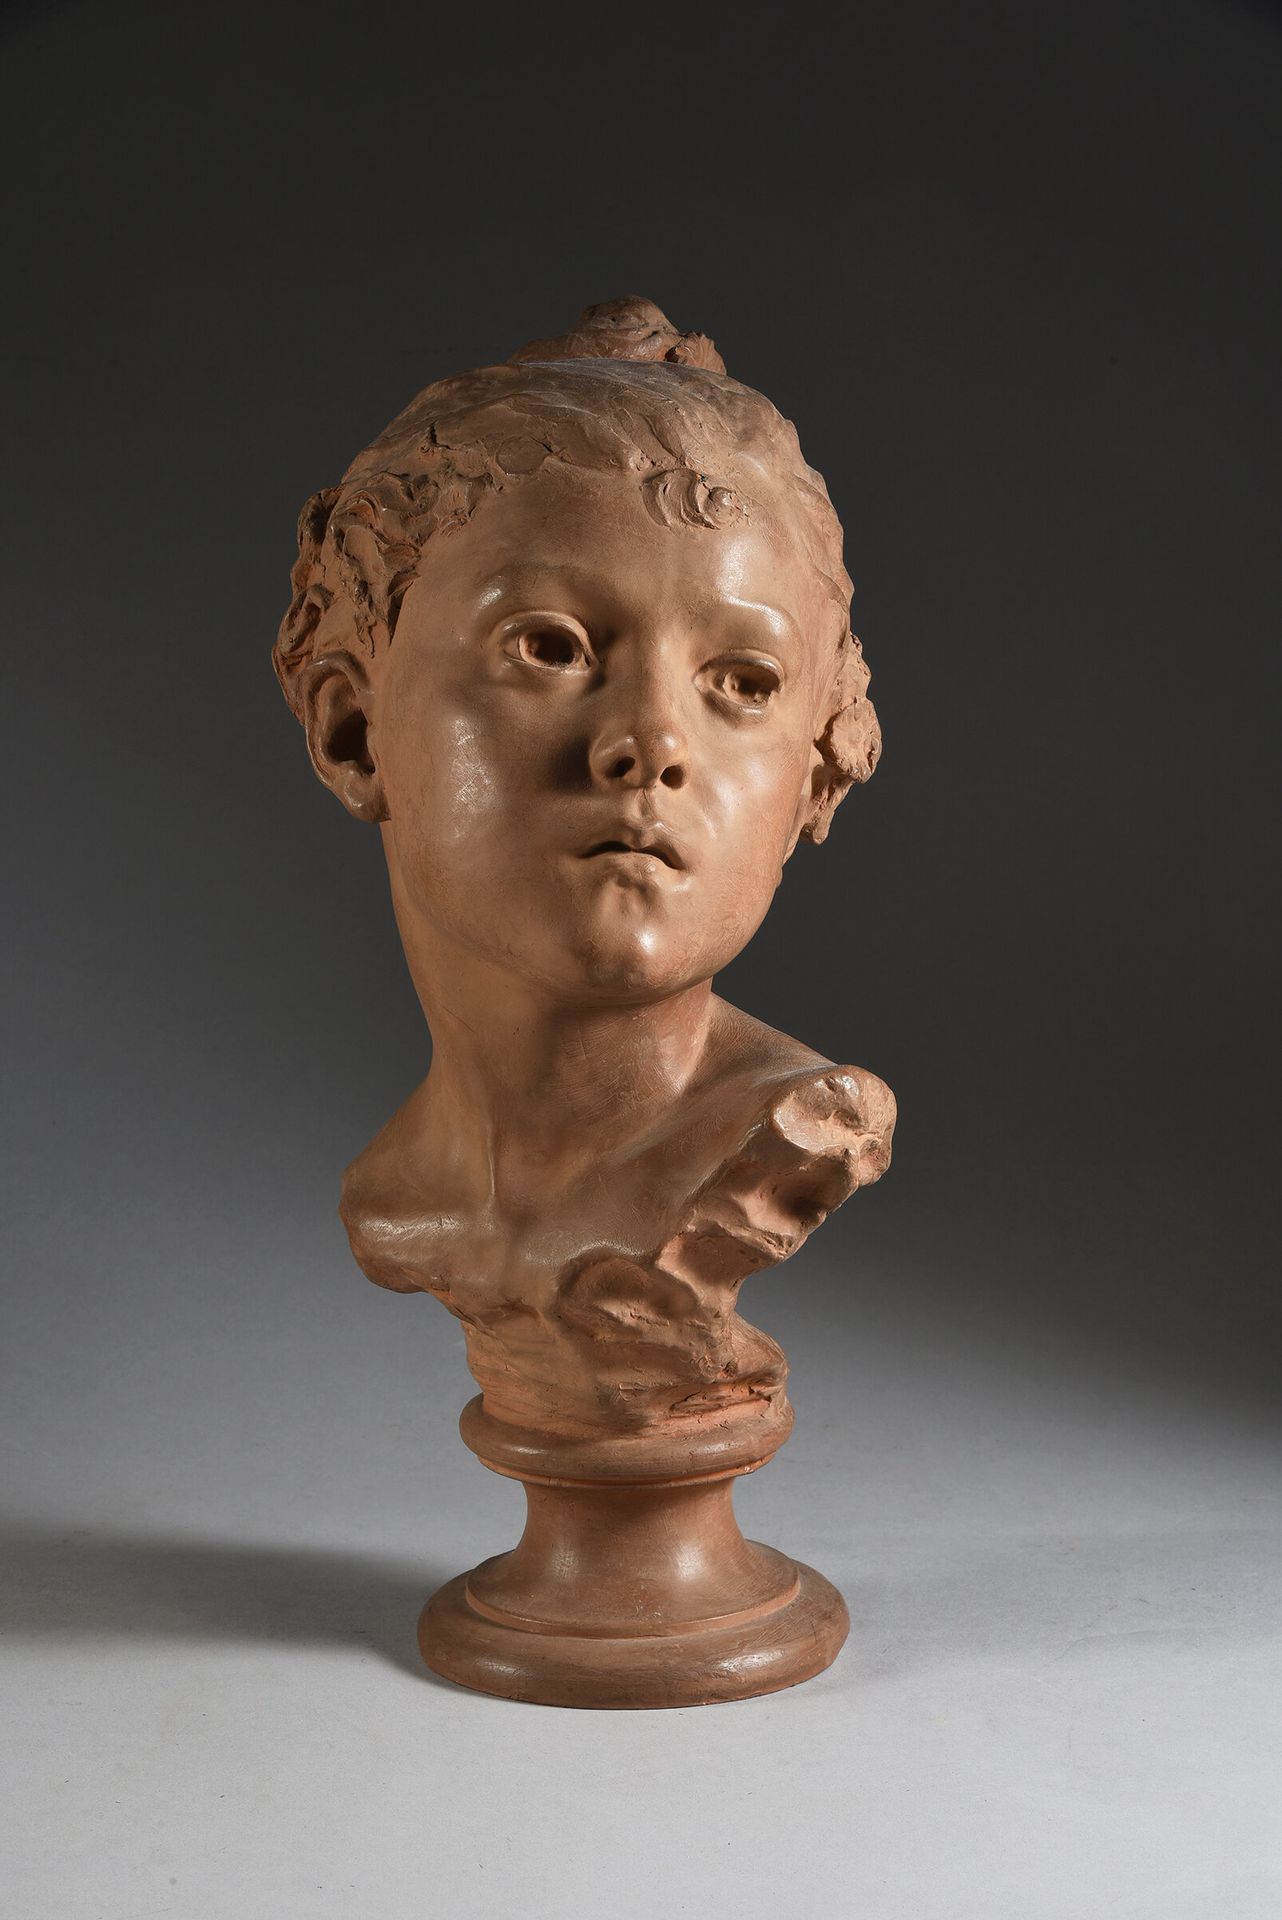 Jules DESBOIS (1851 - 1935) 
一尊少女像。
兵马俑证明。
高：40厘米。